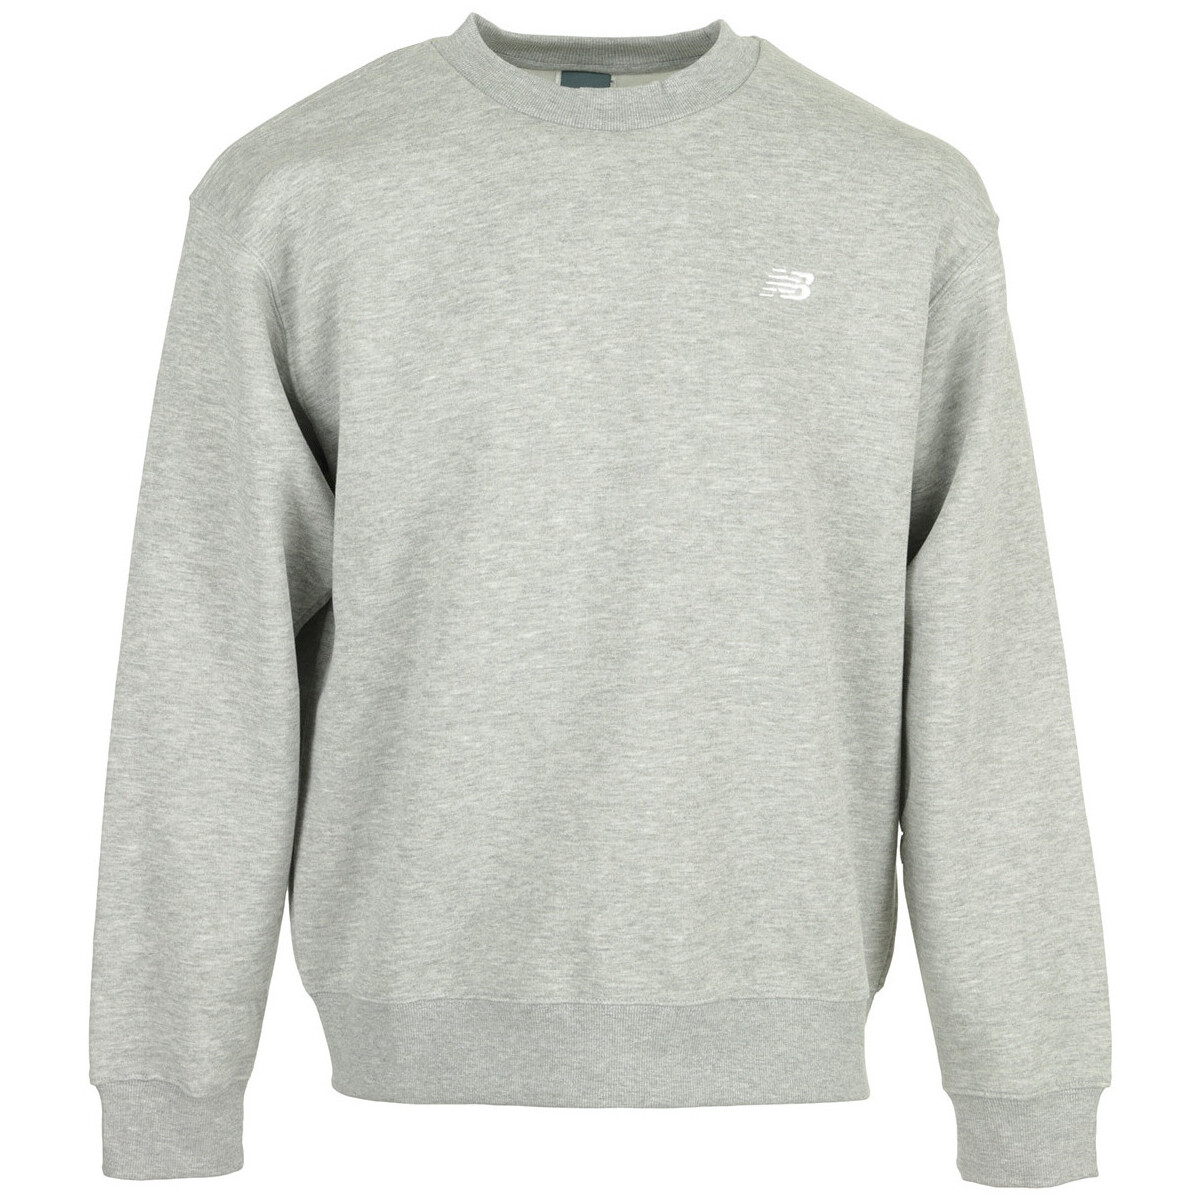 Textiel Heren Sweaters / Sweatshirts New Balance Se Fl Crw Grijs